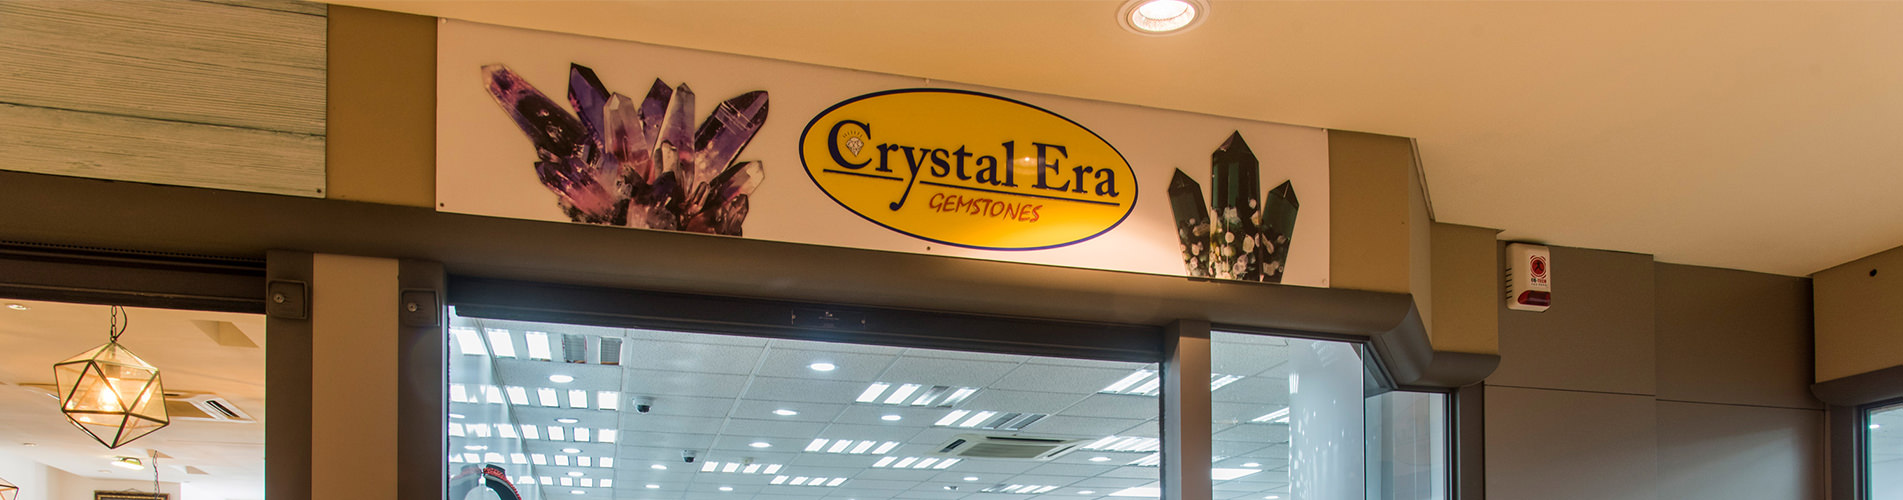 crystal era banner